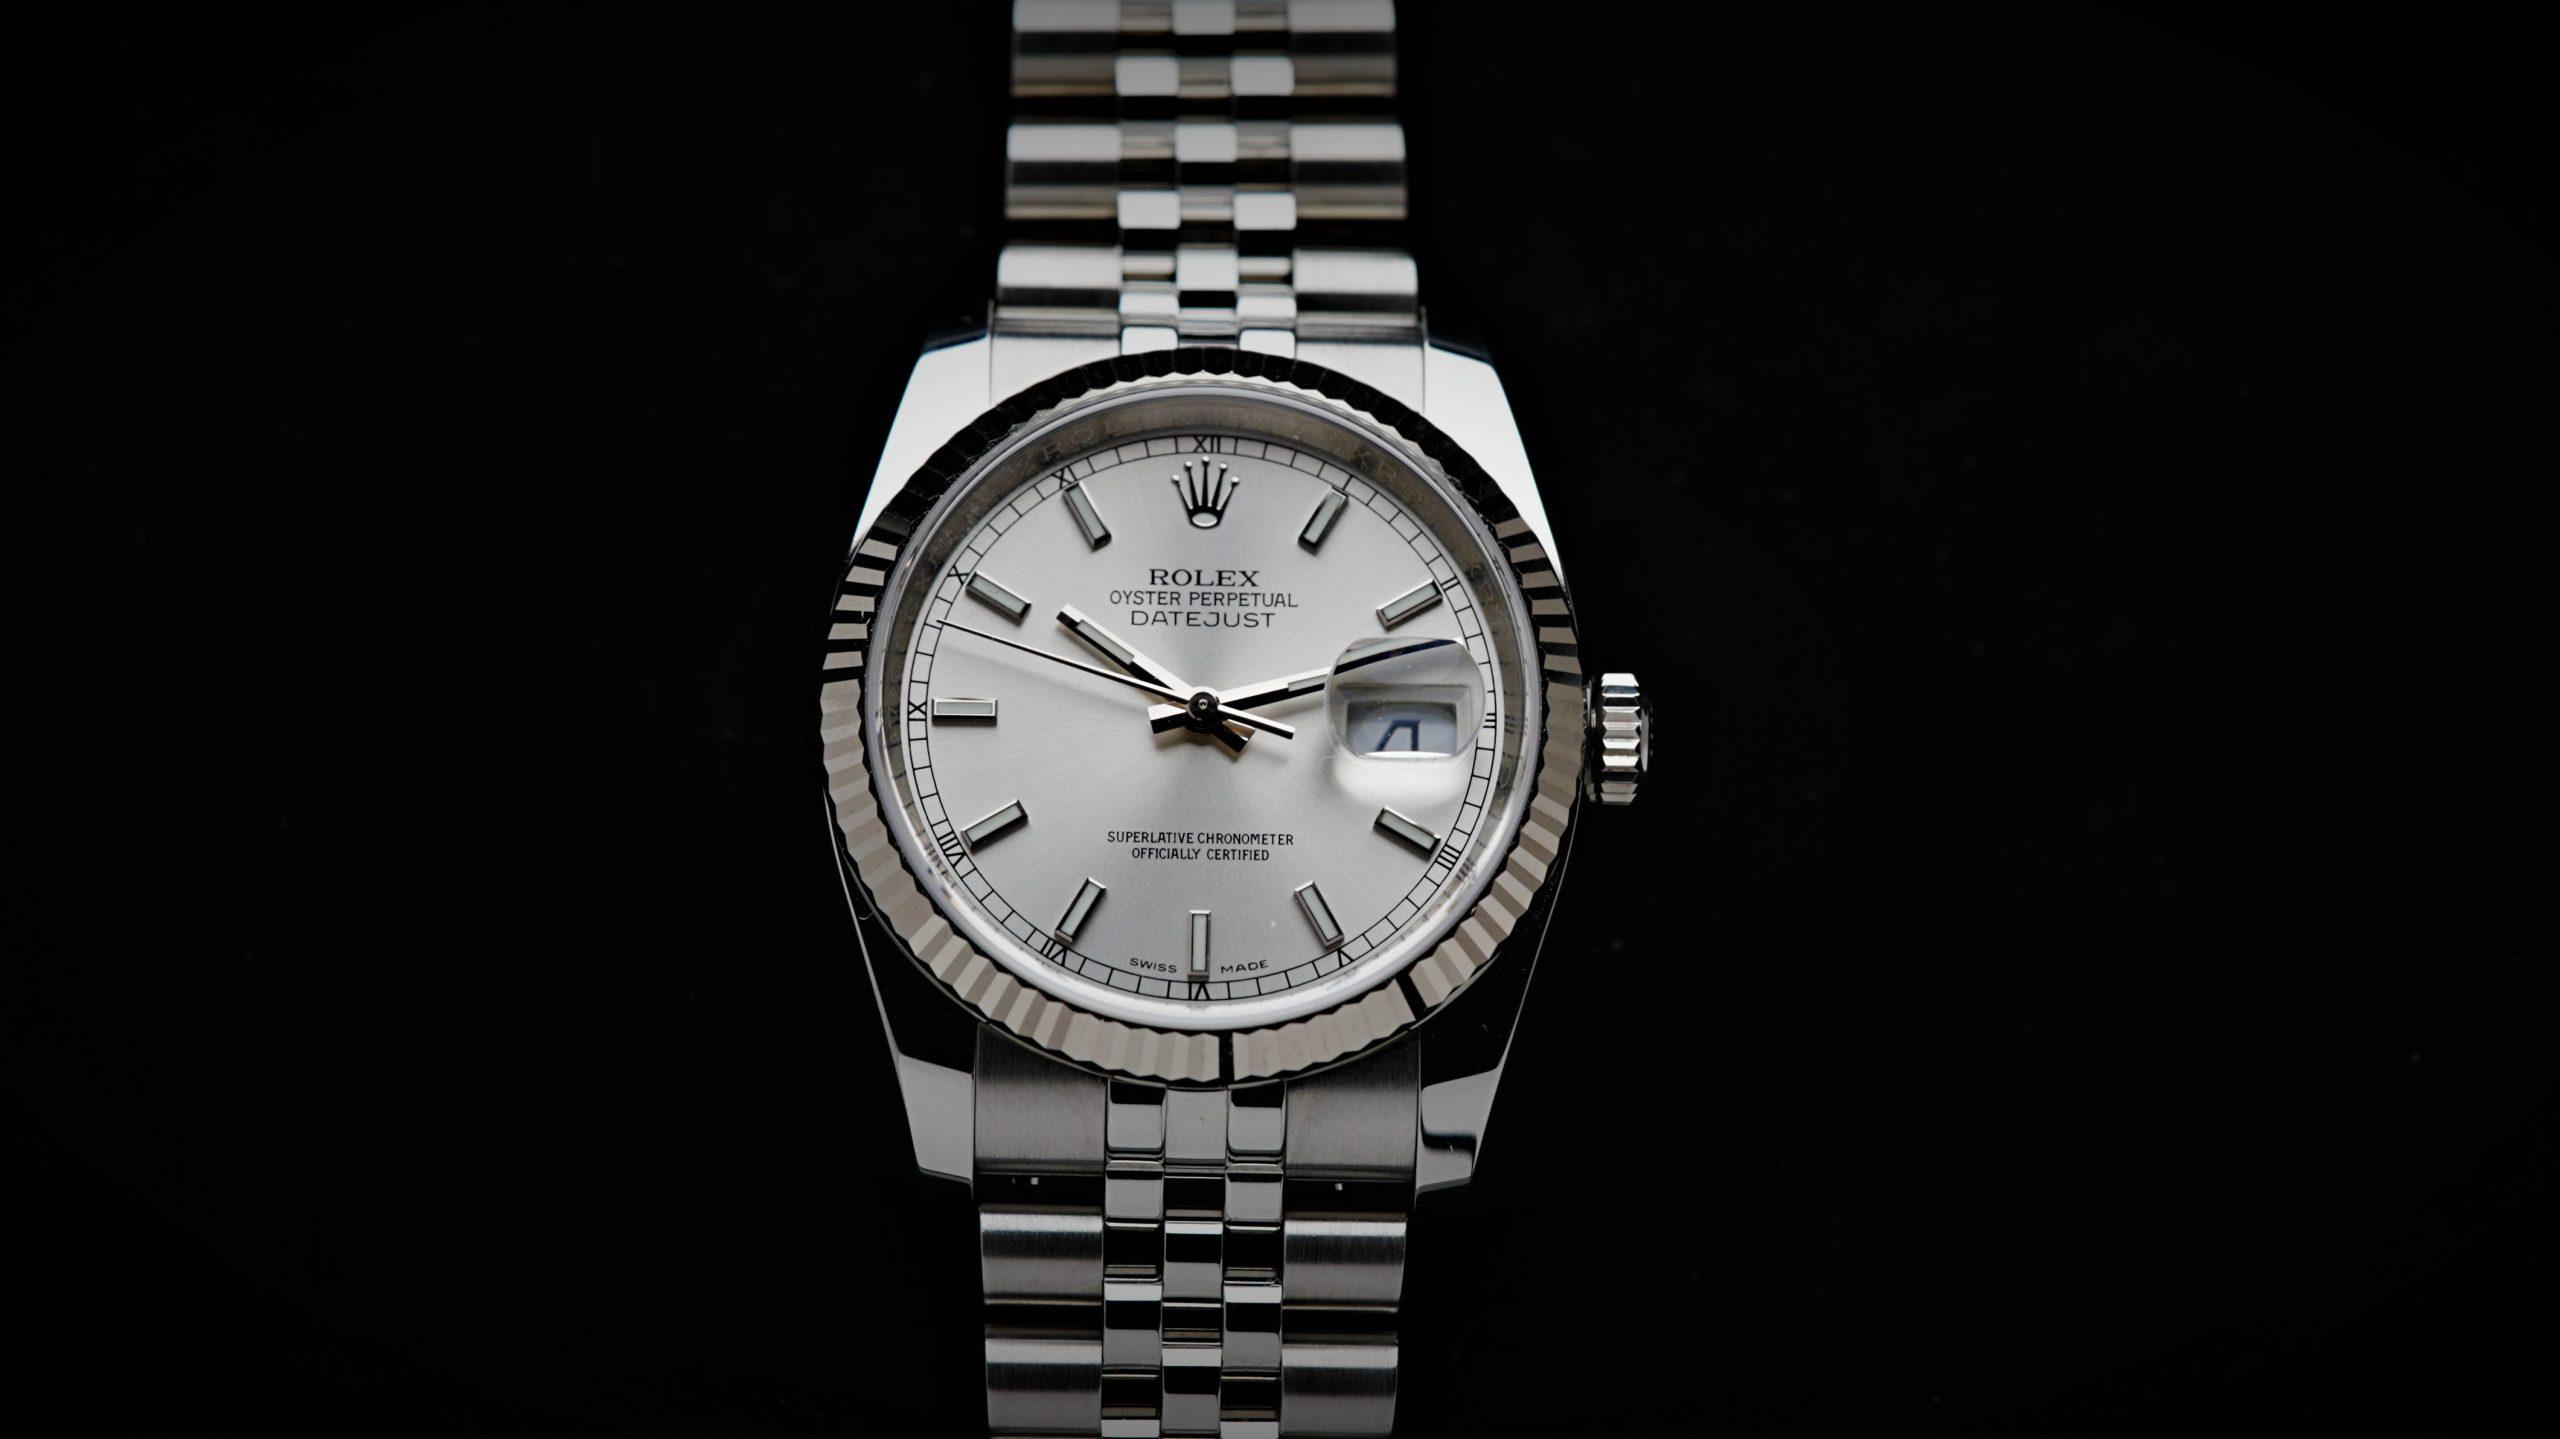 Rolex Datejust 36 Silver Dial watch featured under white lighting.